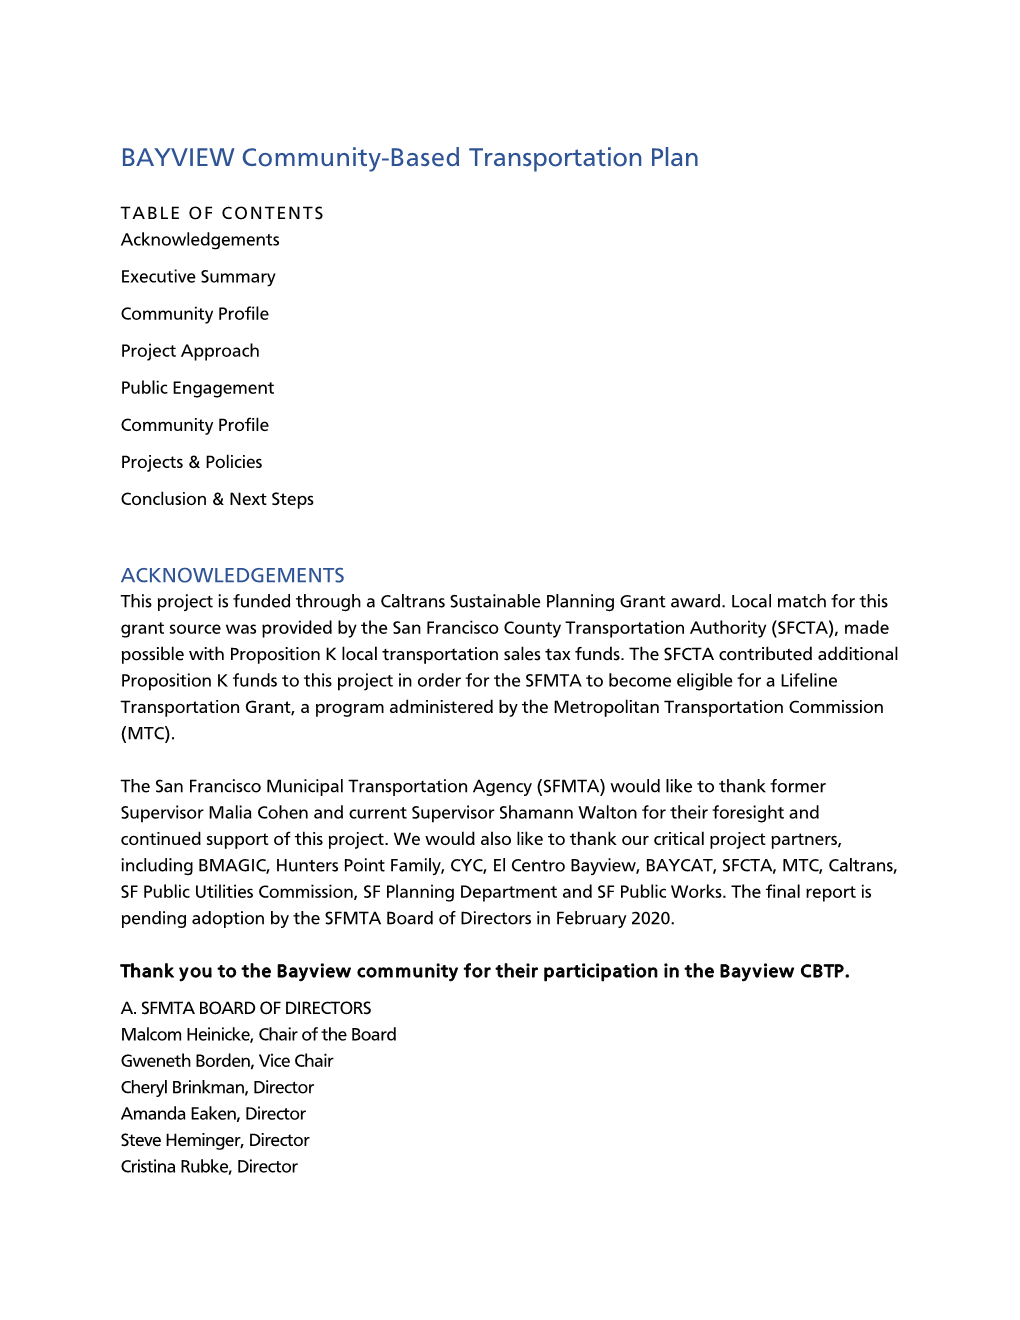 Draft Bayview Community Based Transportation Plan